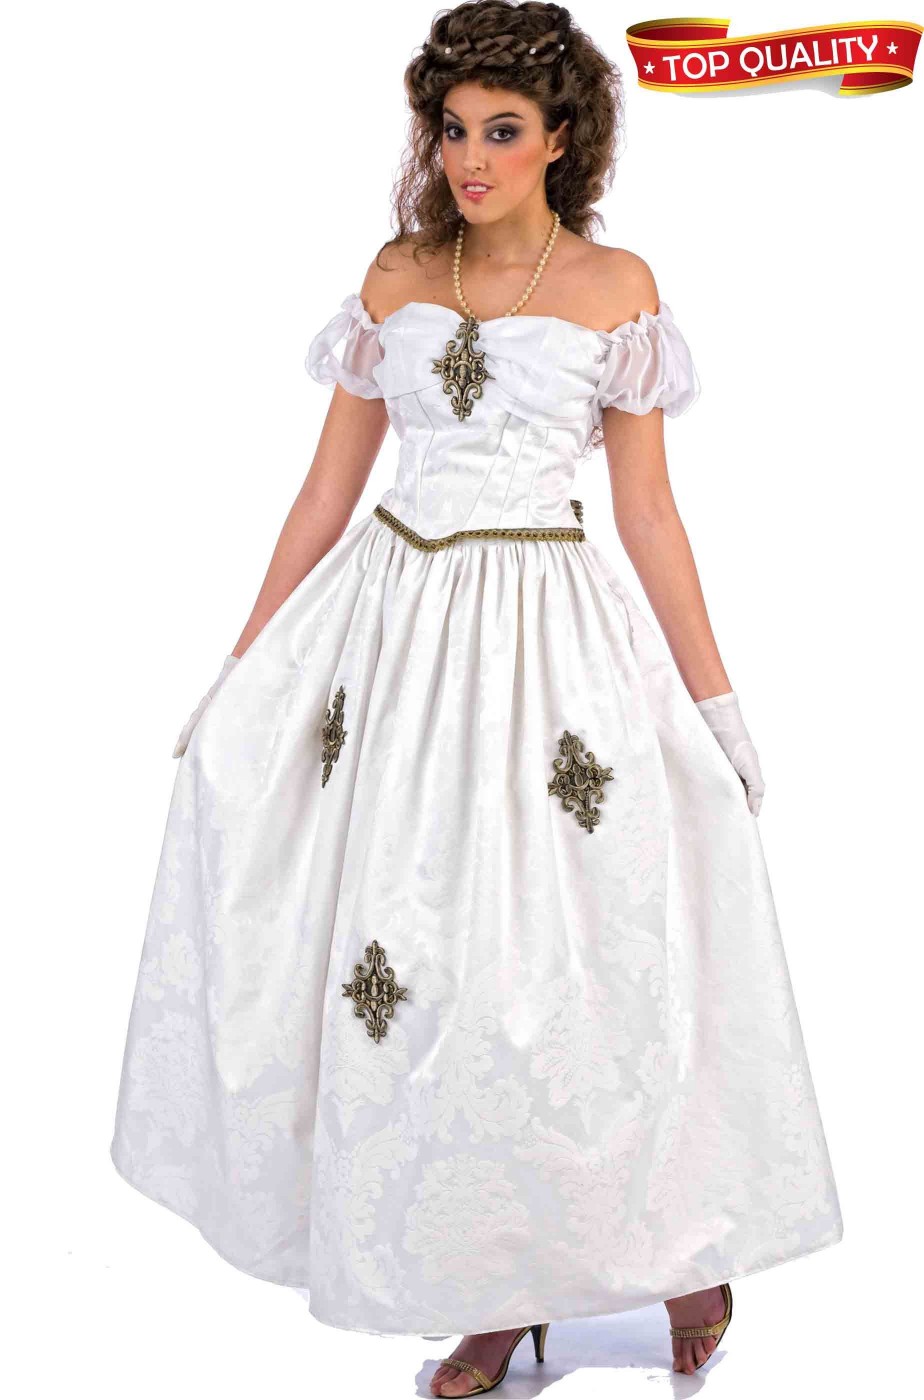 Vestito di Carnevale Principessa donna adulta Dama Bianca